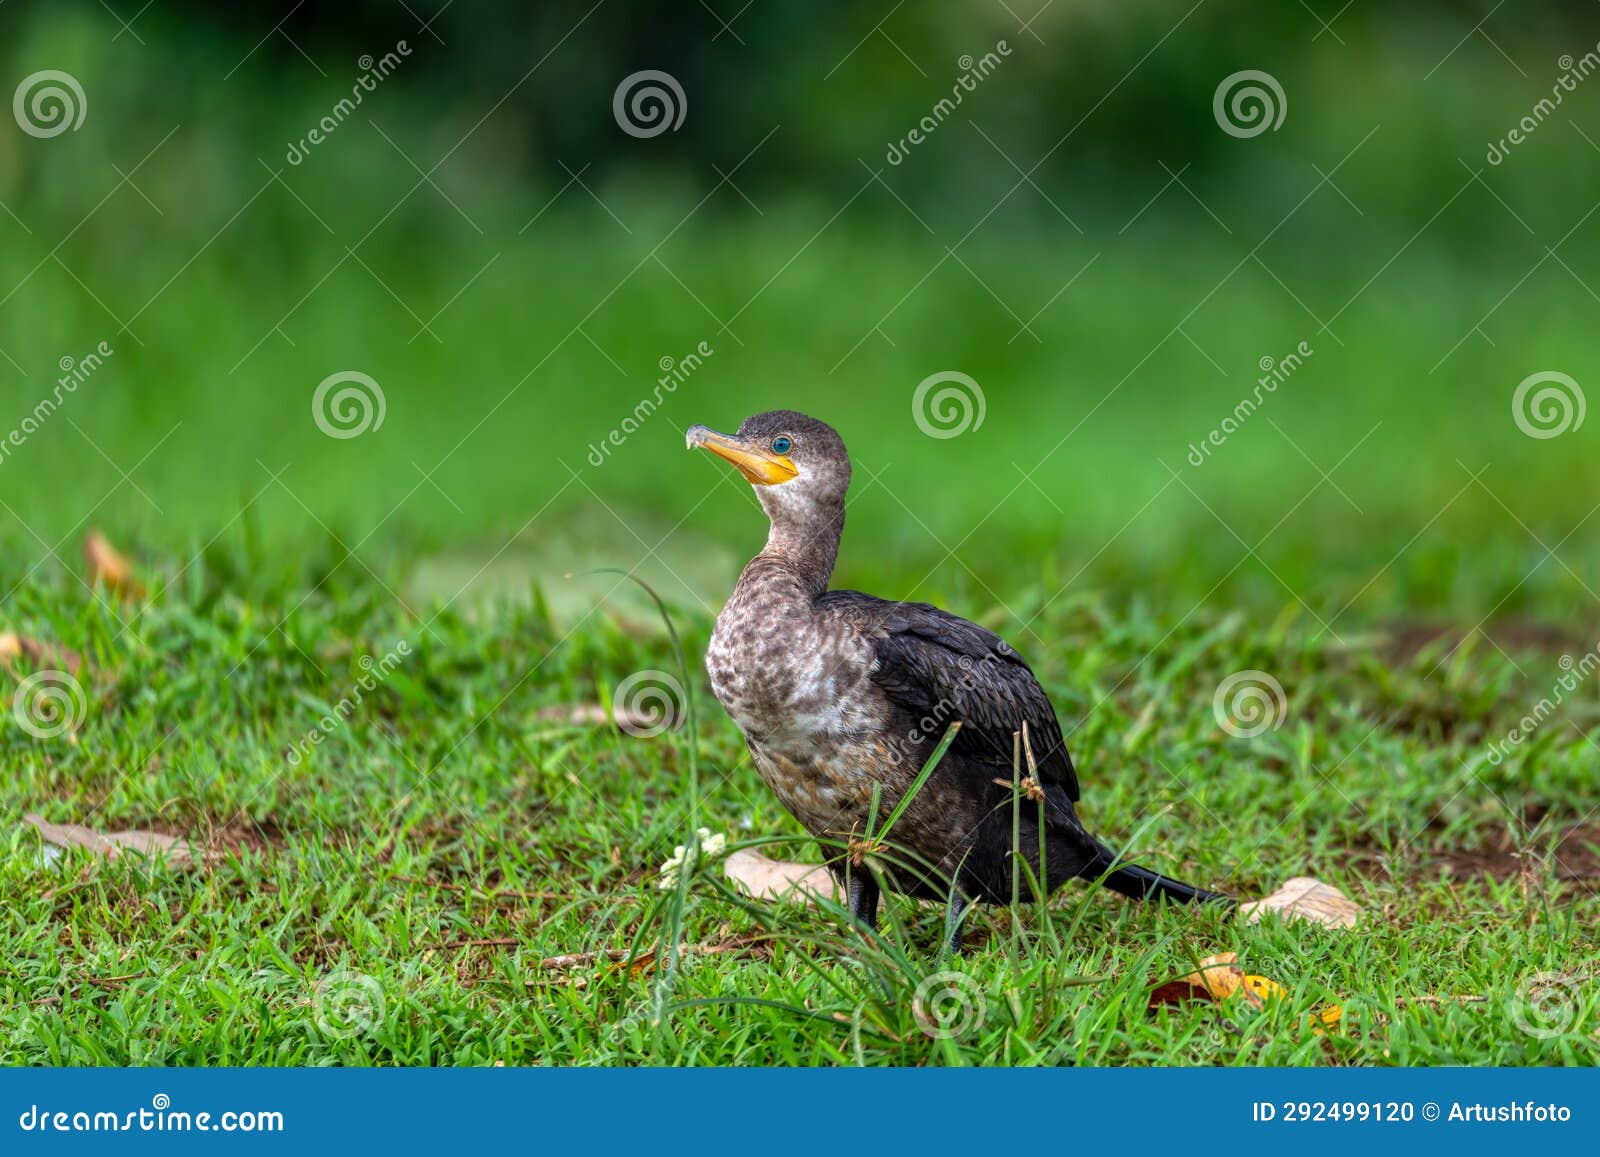 neotropic cormorant - phalacrocorax brasilianus. refugio de vida silvestre cano negro, wildlife and bird watching in costa rica